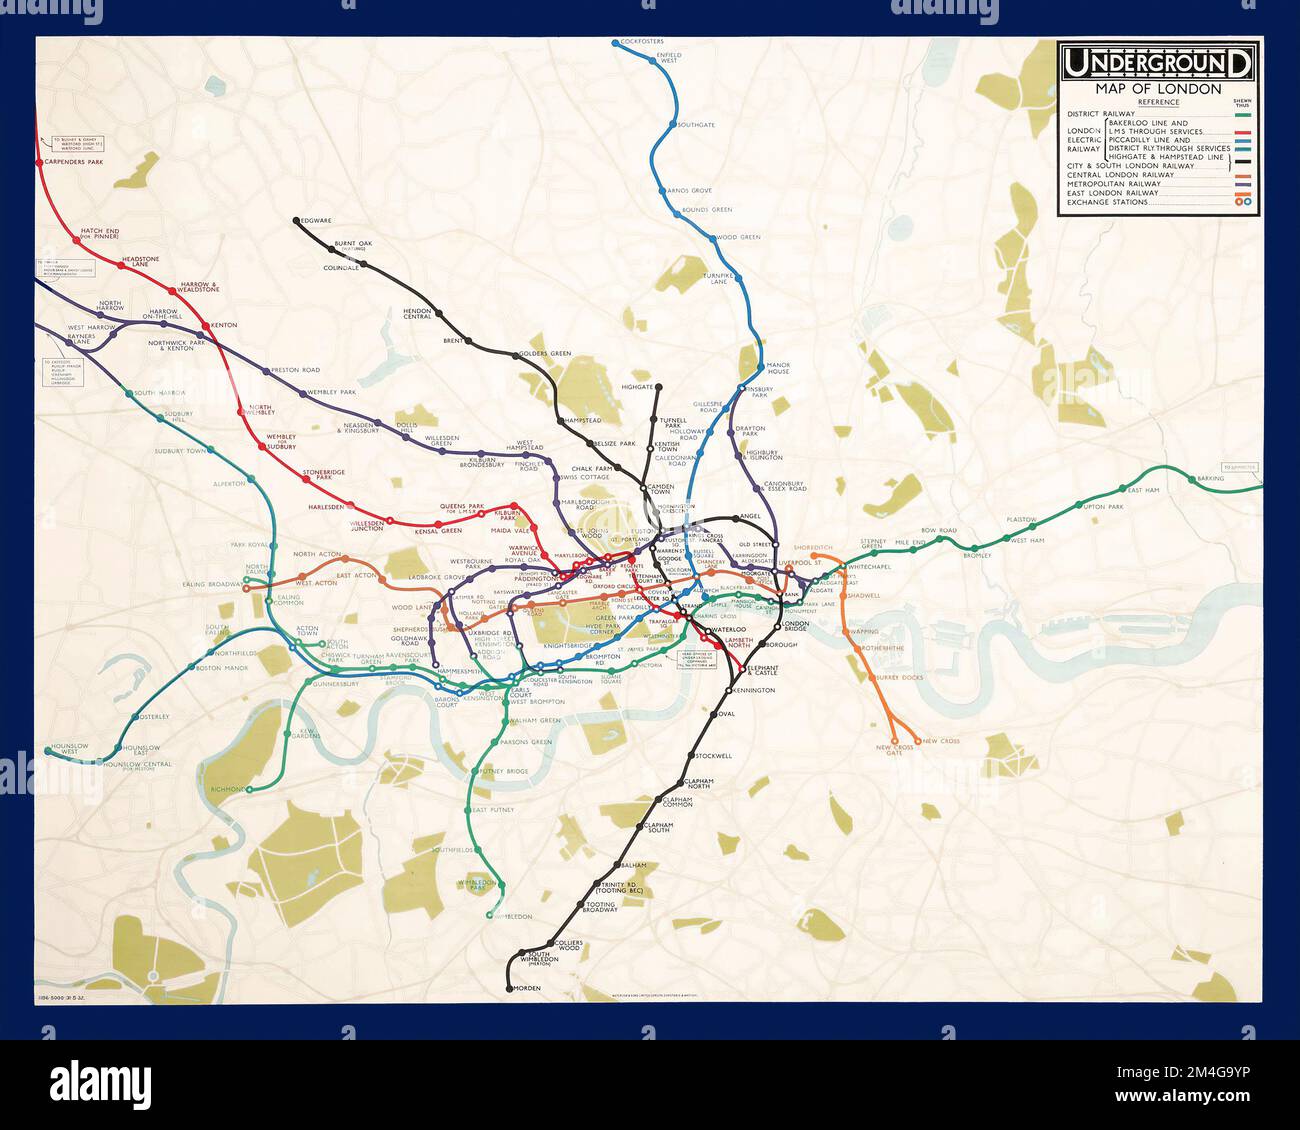 London Underground - F. H. Stingemore - UNDERGROUND MAP OF LONDON 1933 Stock Photo